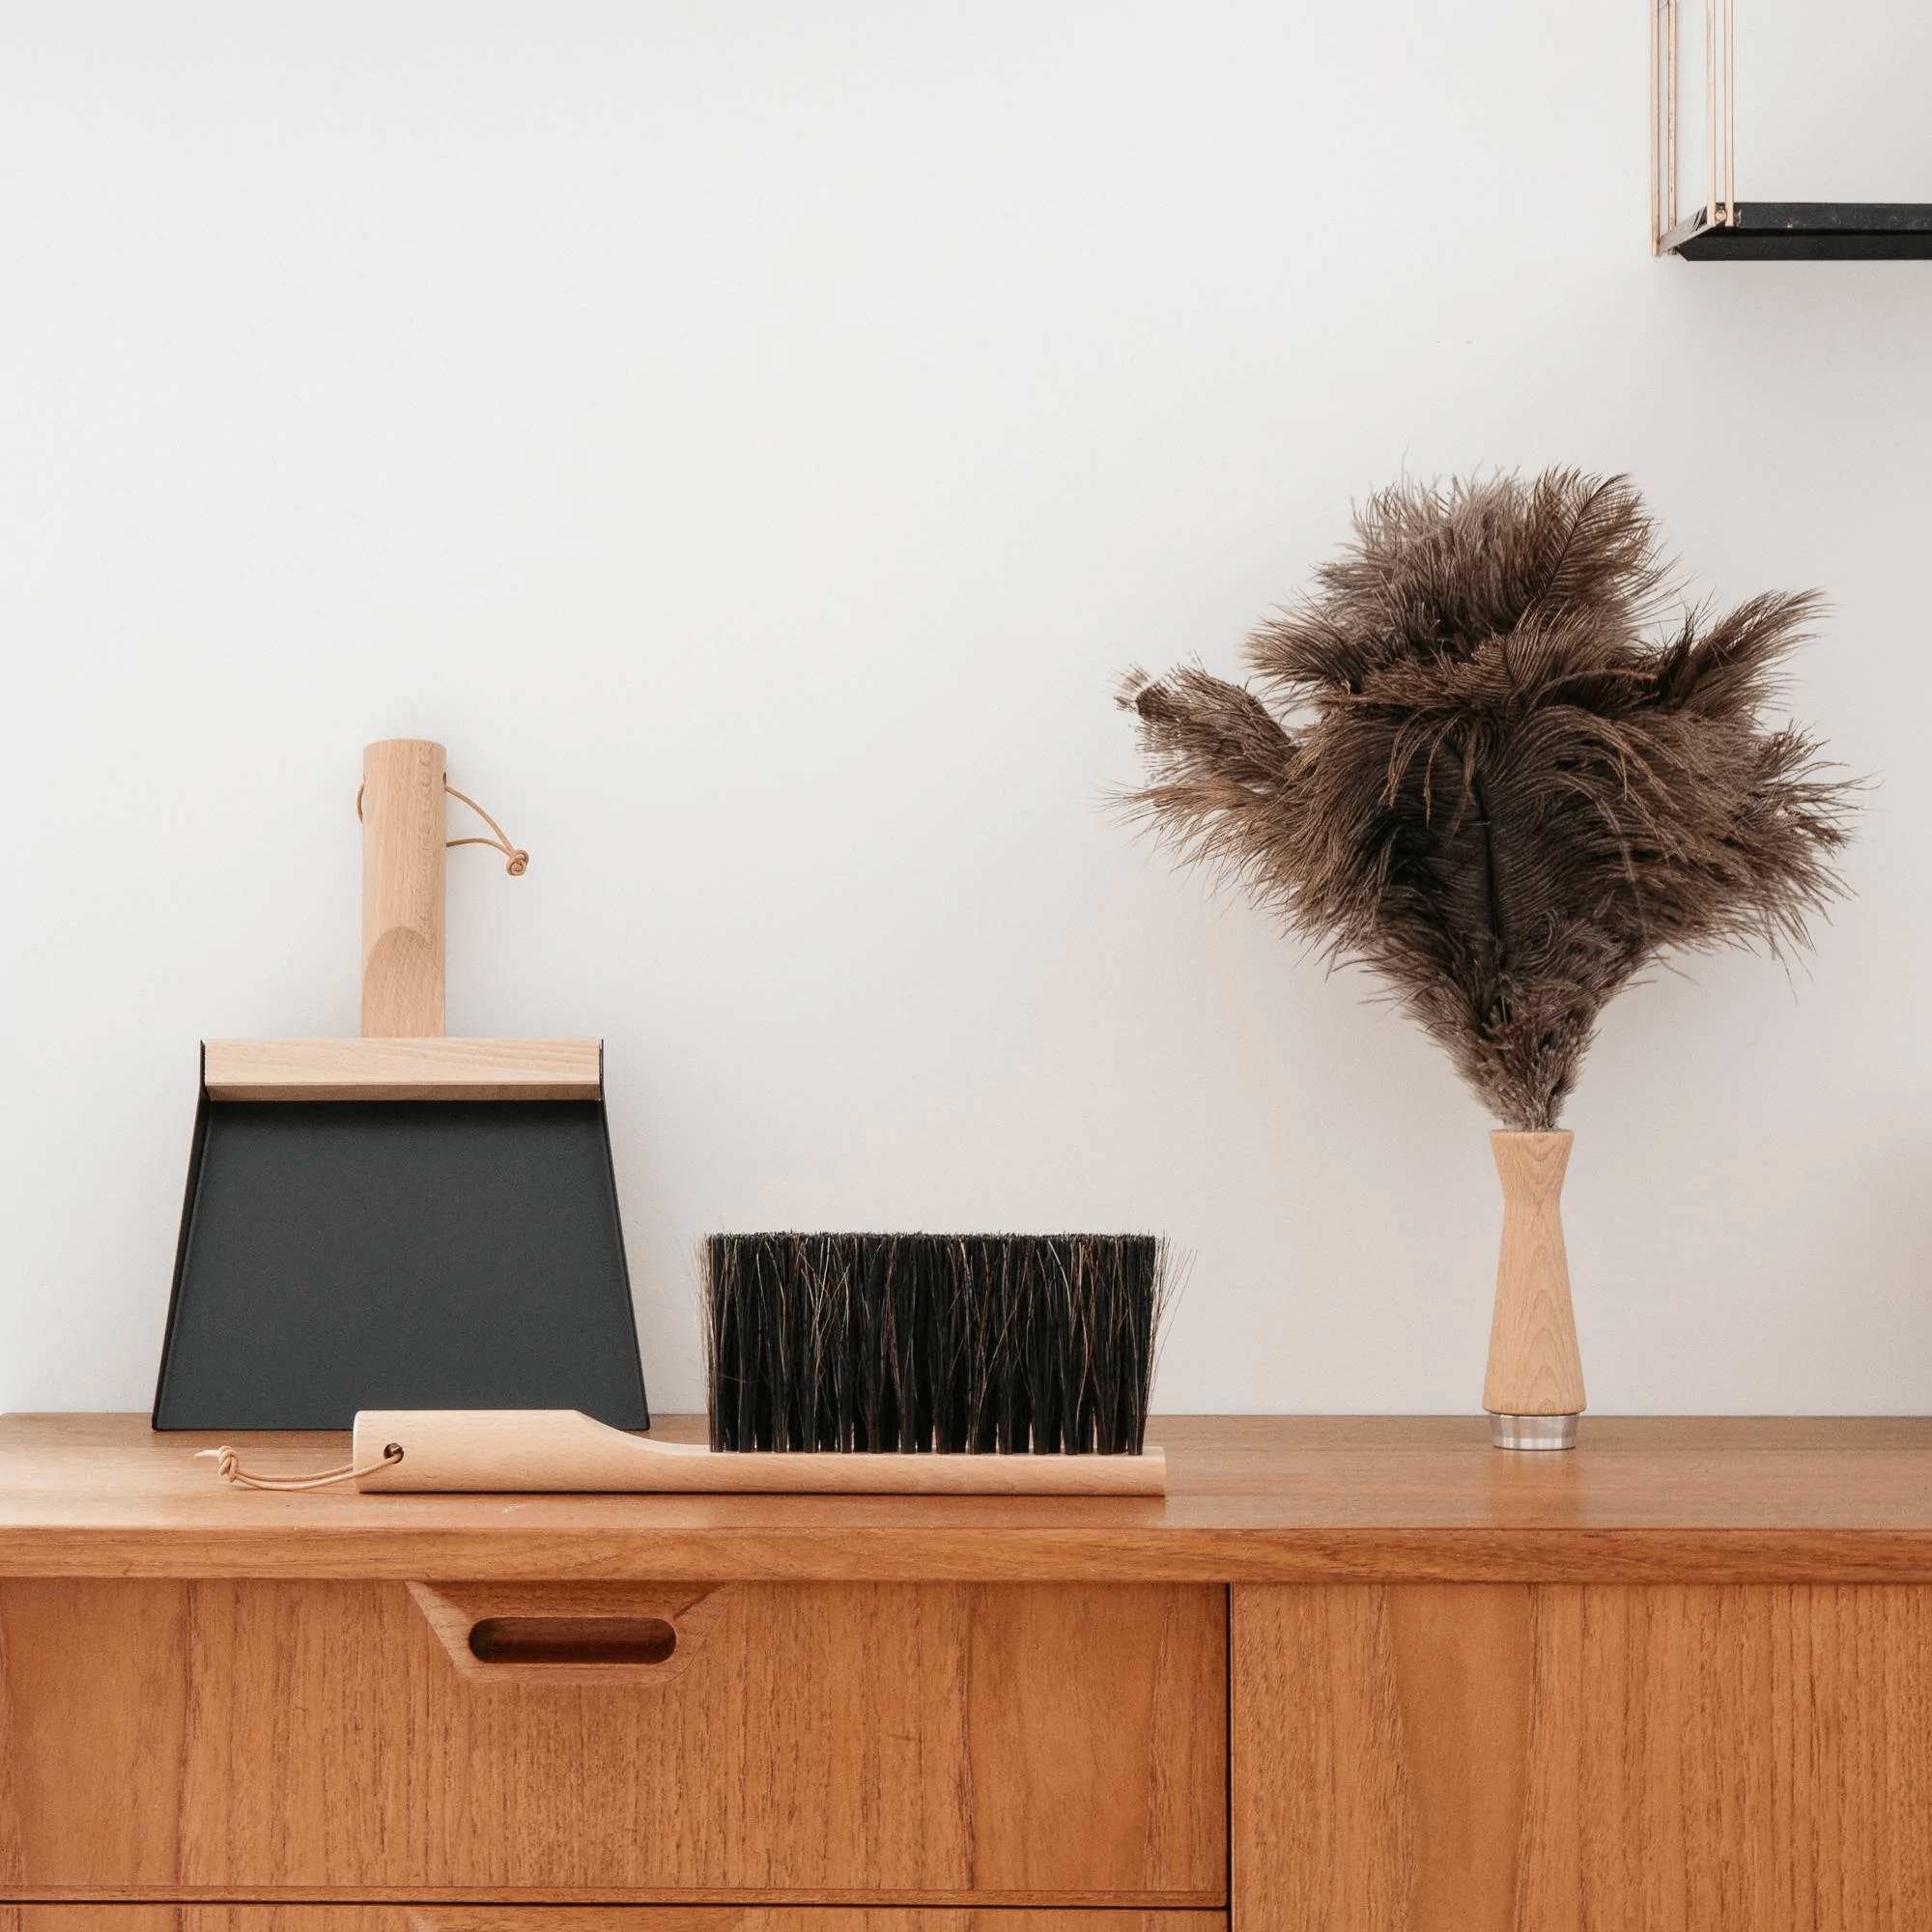 Andrée Jardin Mr. and Mrs. Clynk Black Dustpan & Brush "Coffret" Gift Set with Wall Hooks